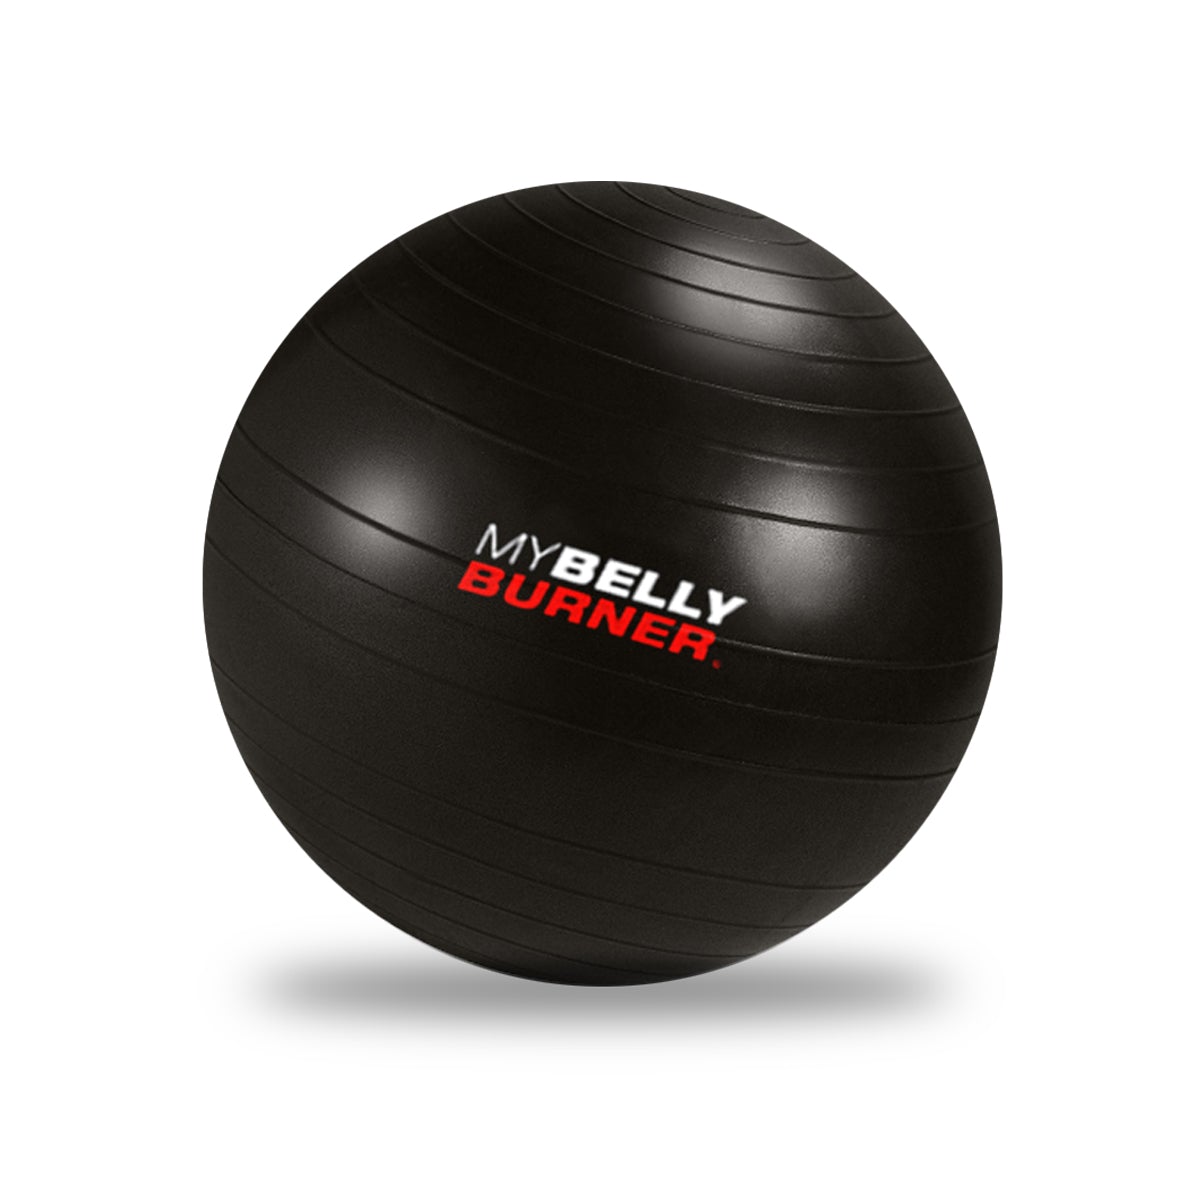 My Belly Burner Exercise Ball